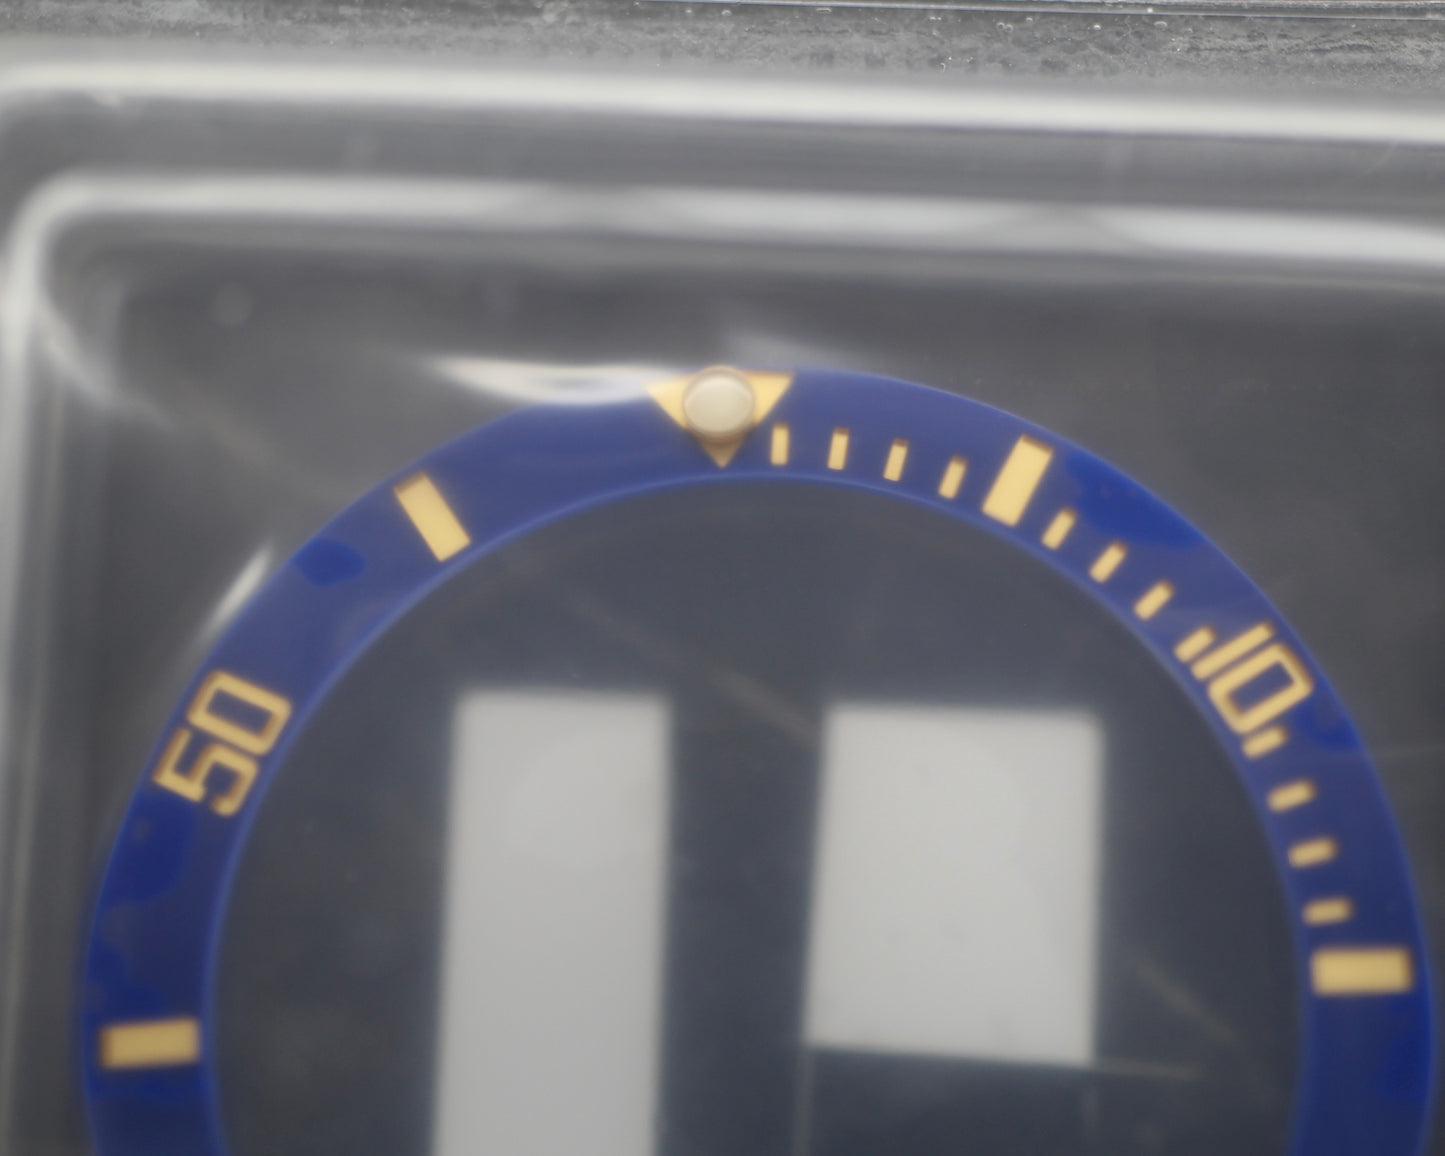 NEW Rolex 116618LB Submariner Date Inserto Ghiera Ceramica Blu Chromalight Dot In Blister